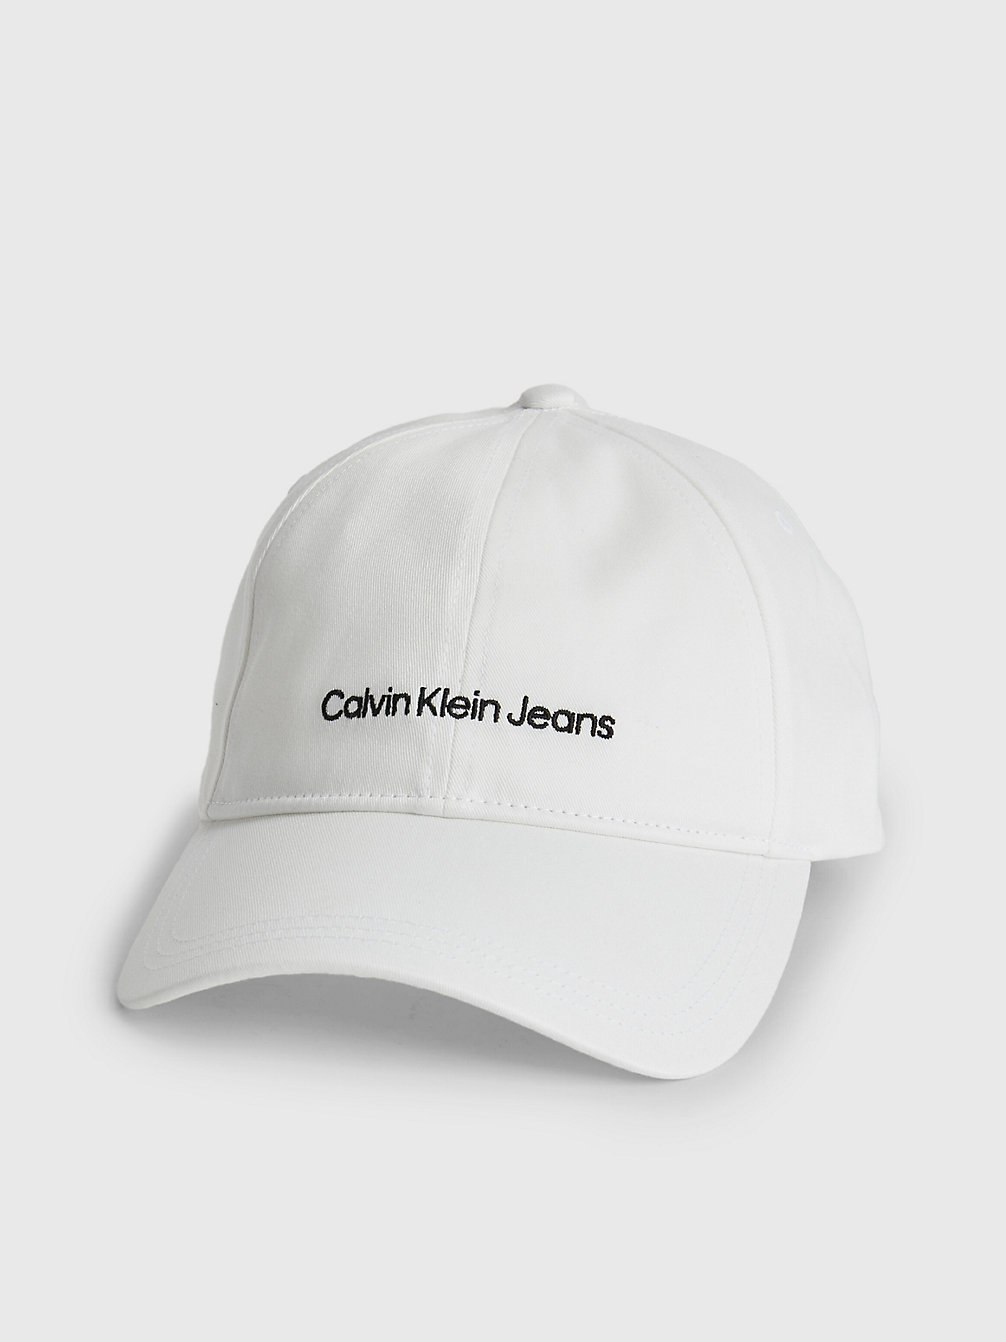 Casquette En Coton Bio Avec Logo > BRIGHT WHITE > undefined hommes > Calvin Klein